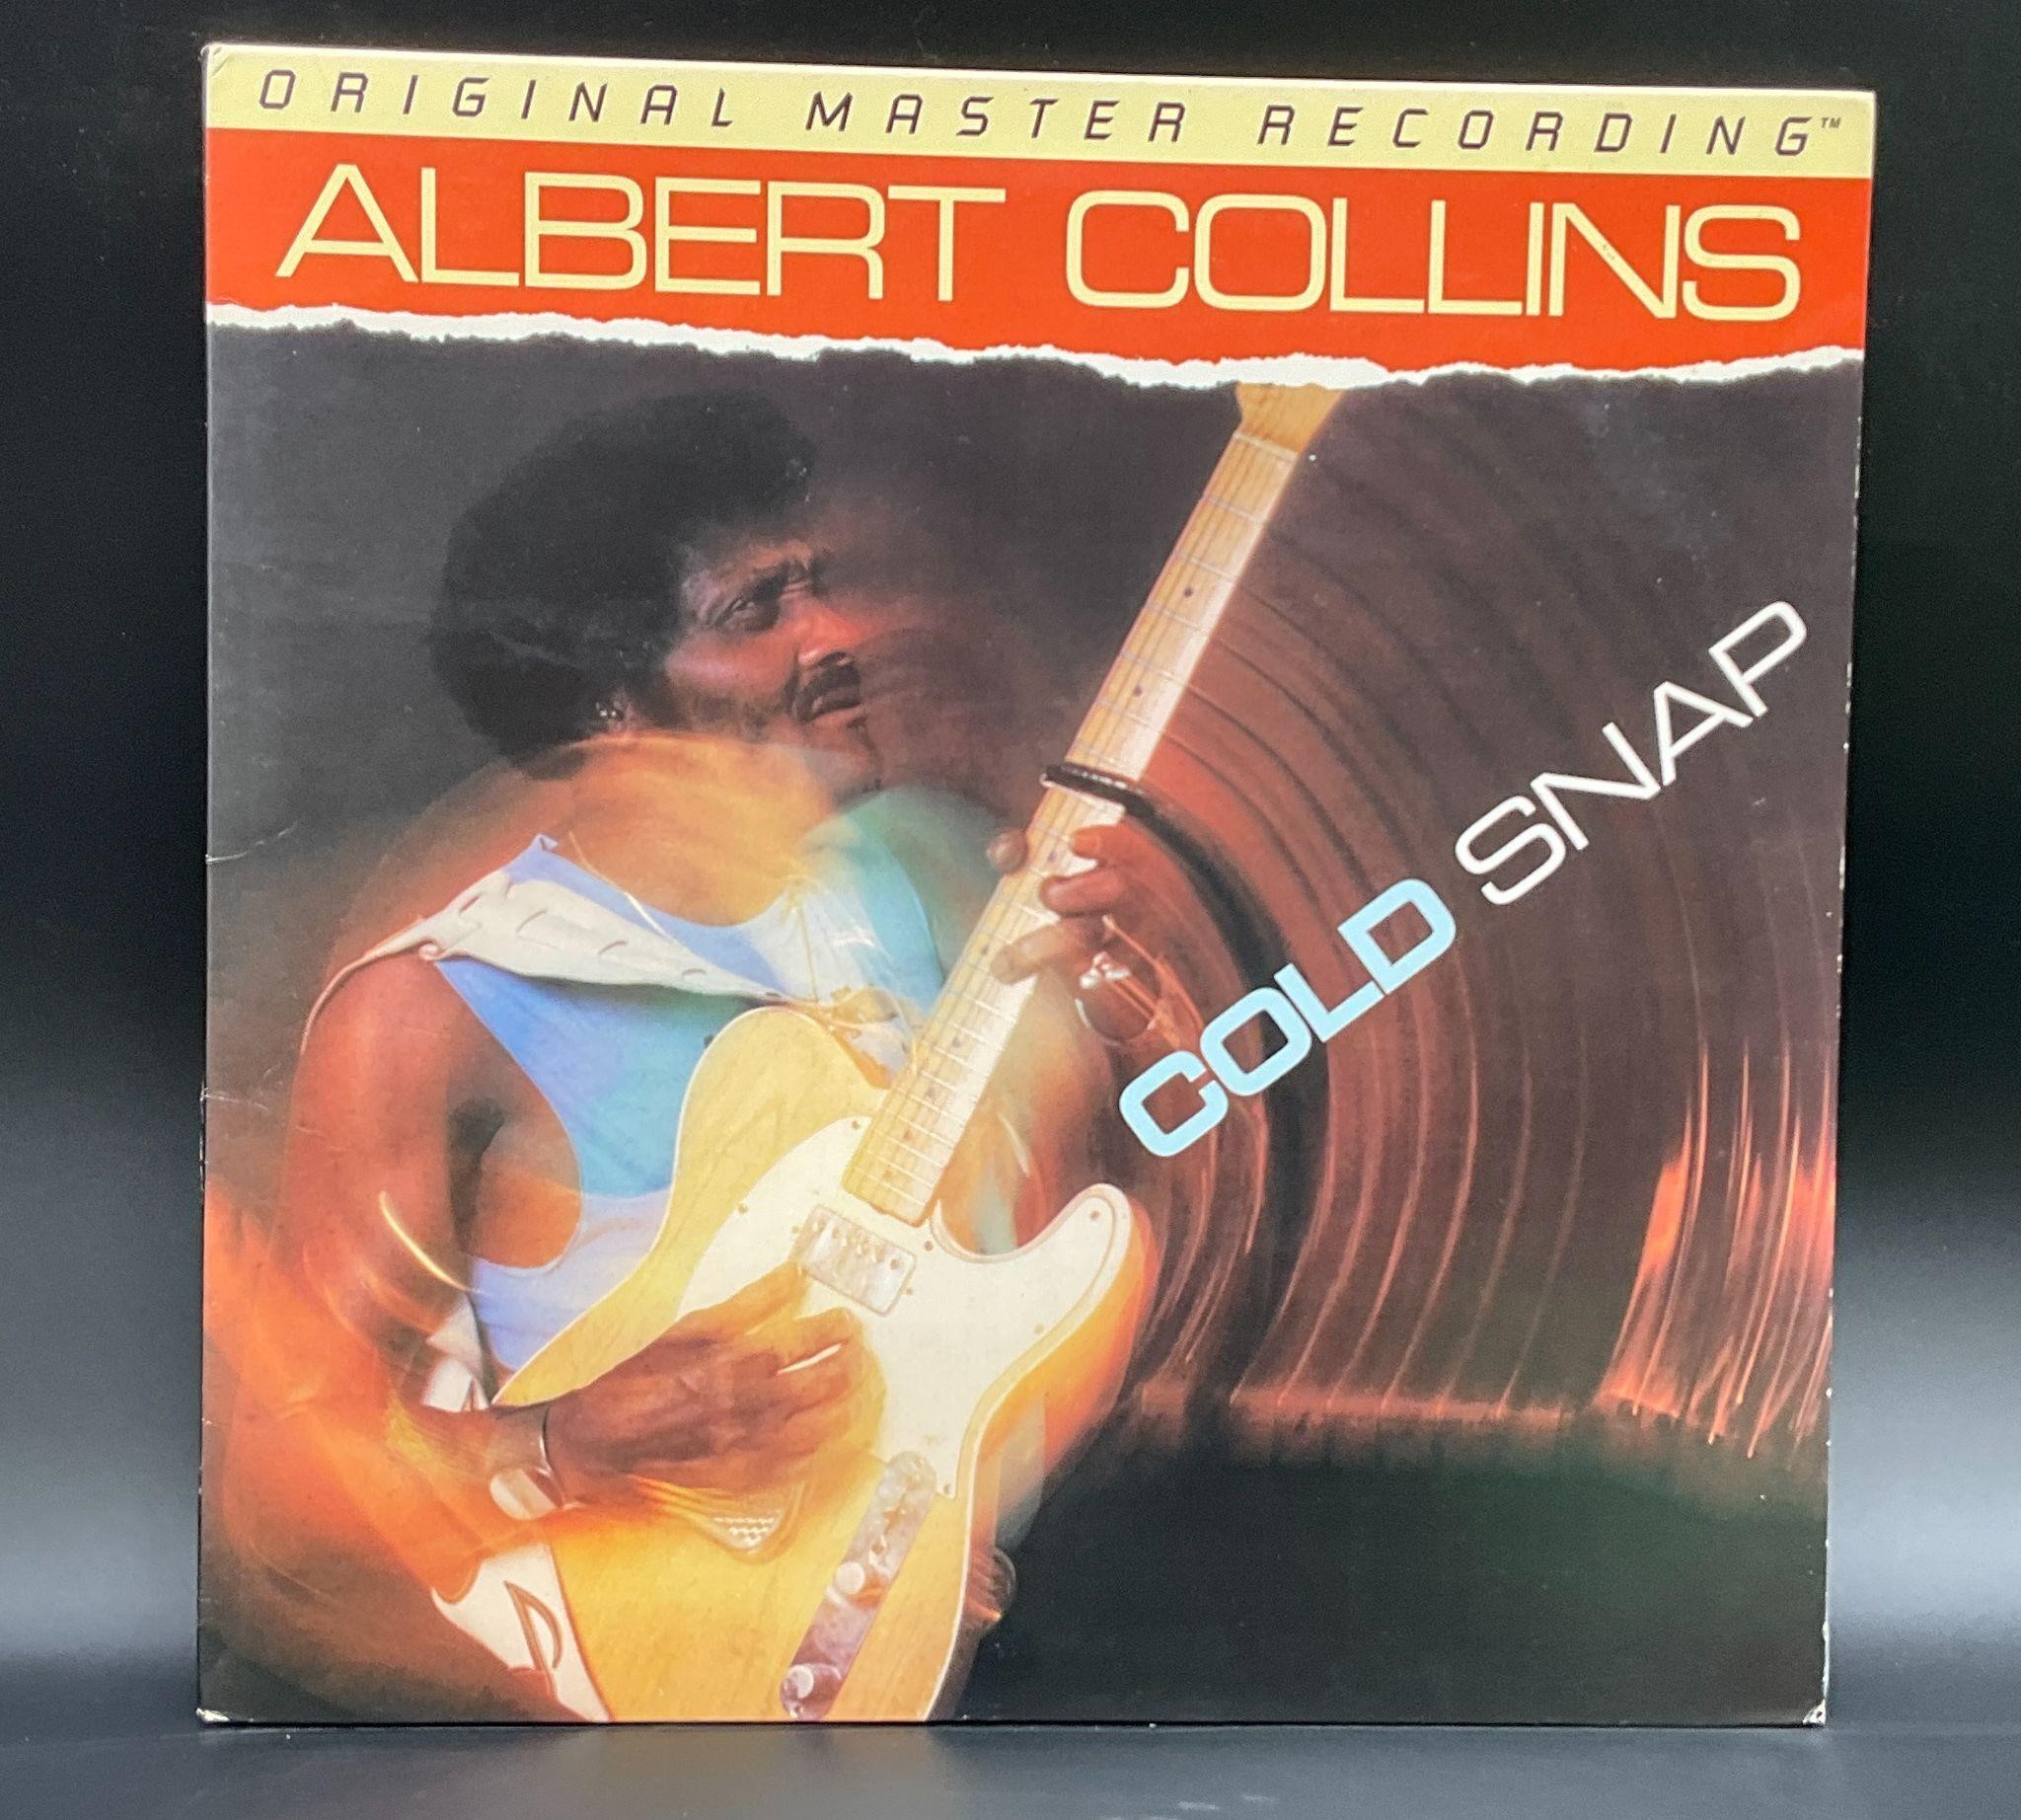 Albert Collins "Cold Snap" Original Master MFSL